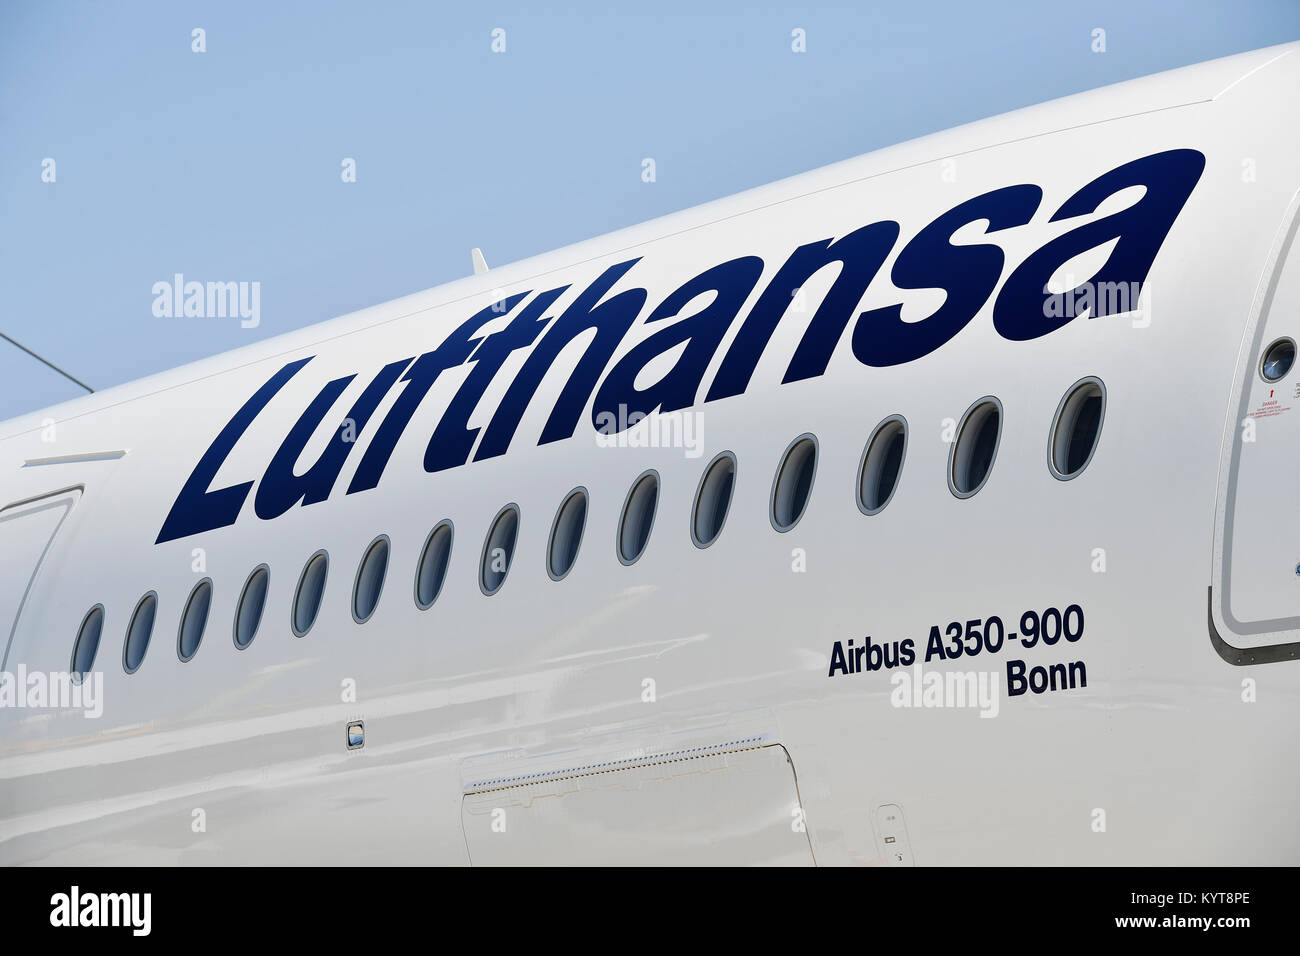 details, registration, letter, letters, number, numbers, D-AIXD, Bonn, flag, sign, Lufthansa, Airbus, A350-900, Munich Airport, Stock Photo